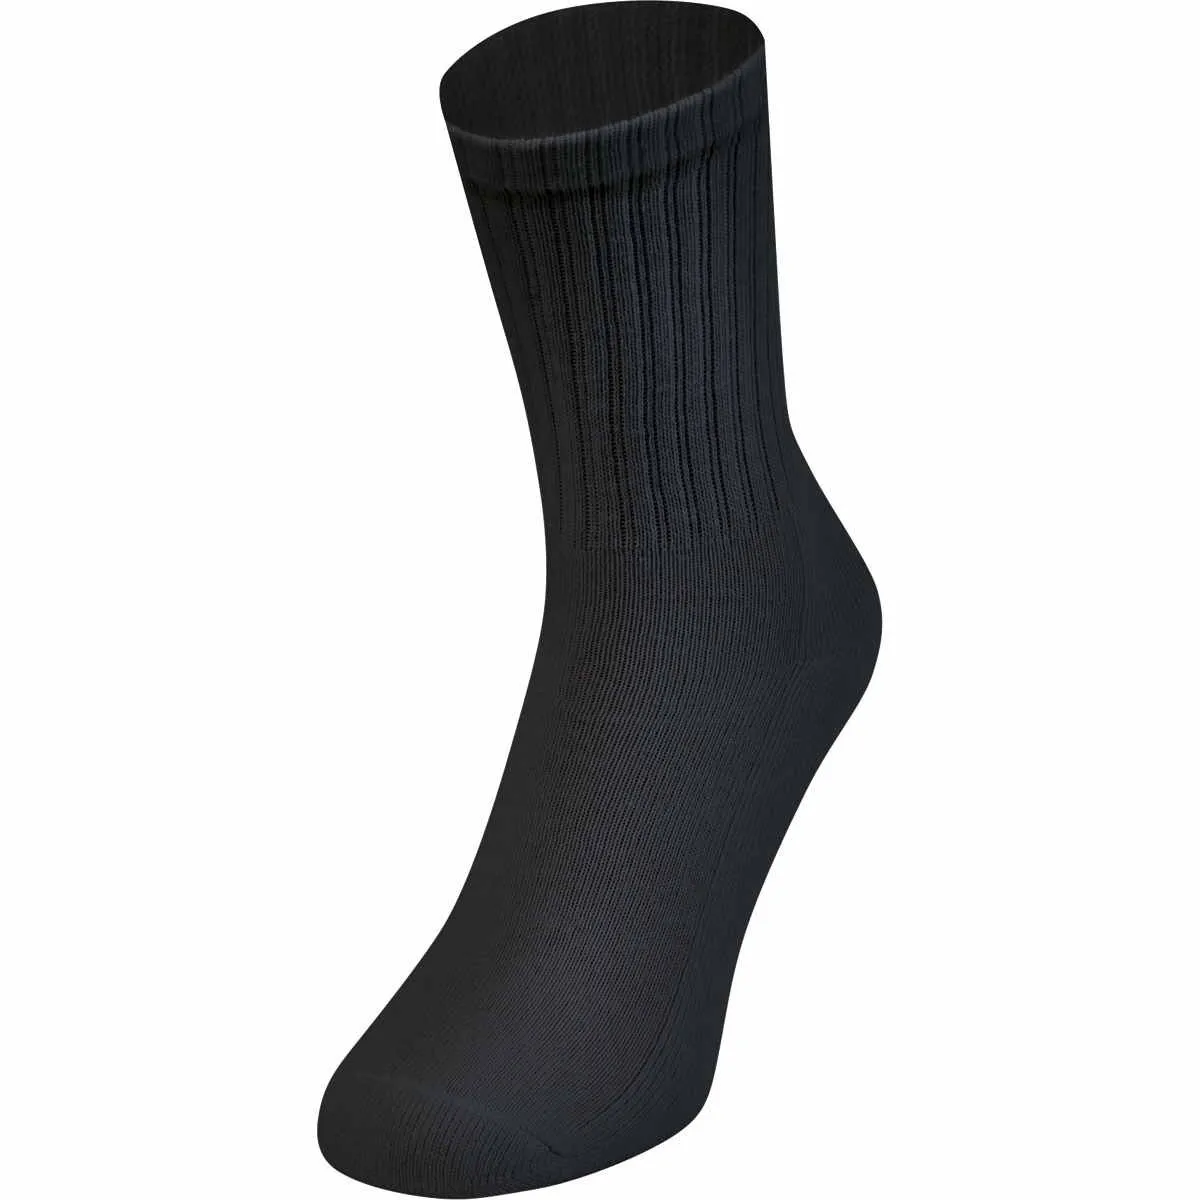 Jako sports socks long black, pack of 3